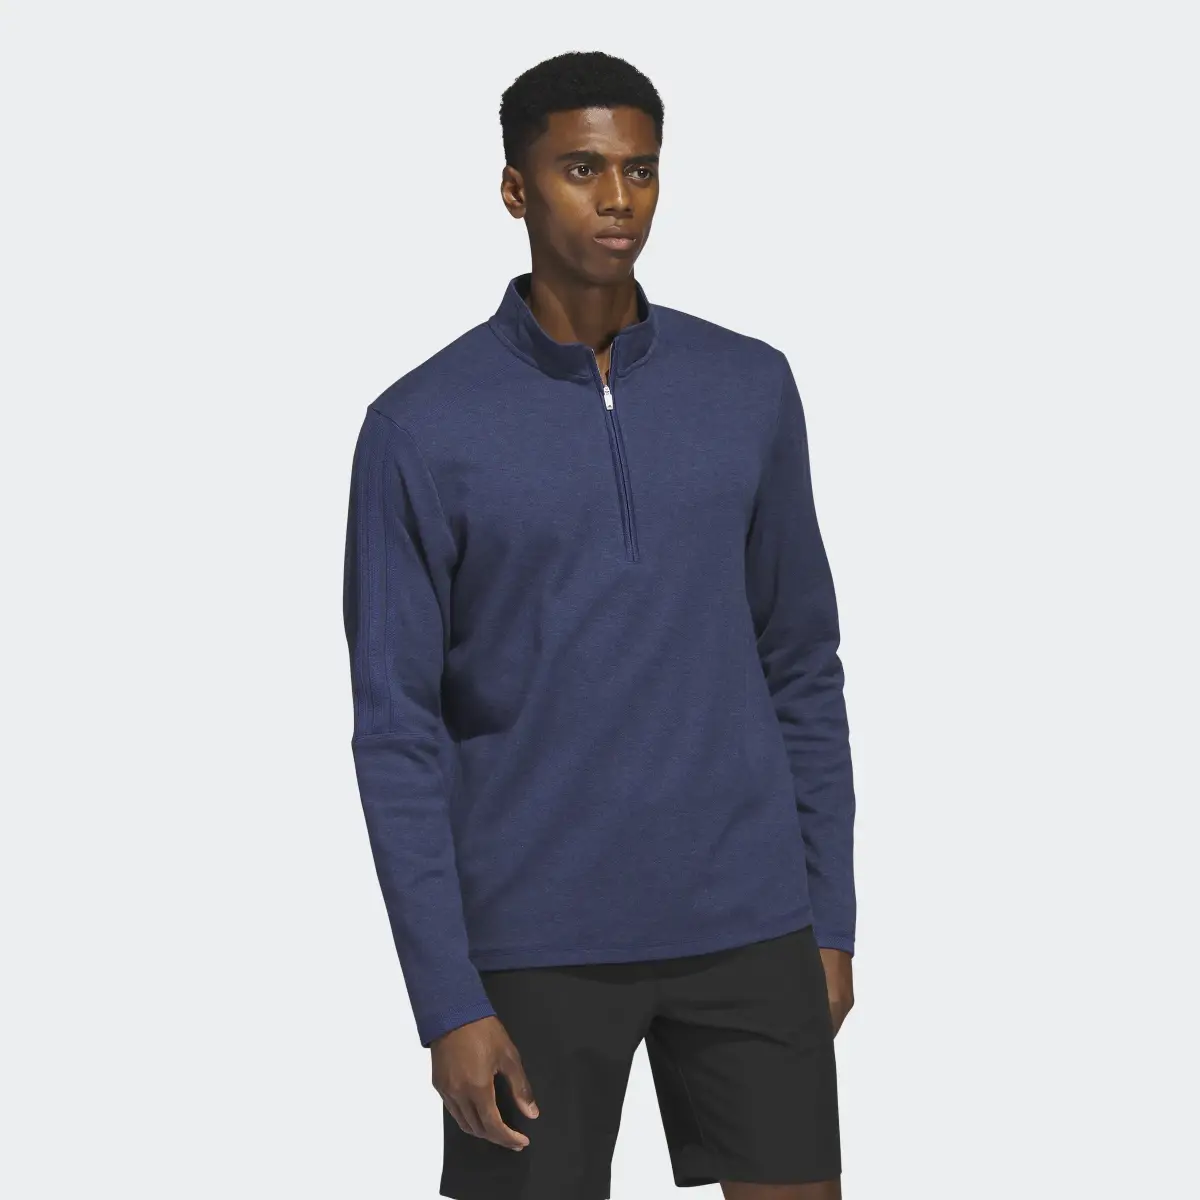 Adidas 3-Stripes Quarter-Zip Pullover. 2